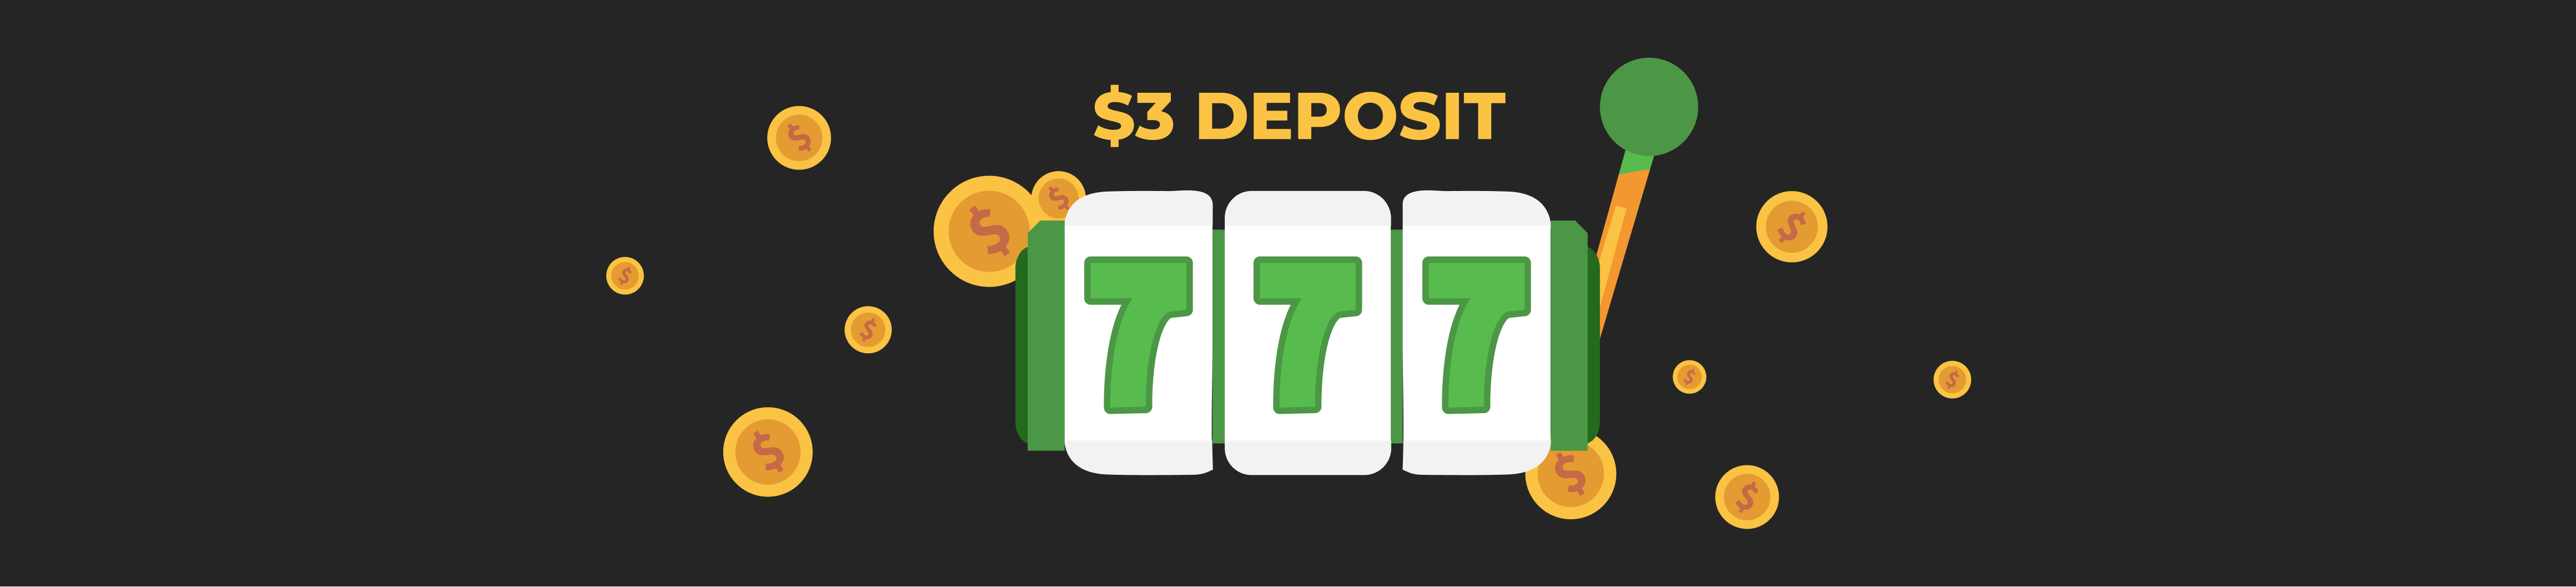 3 dollar deposit casino games